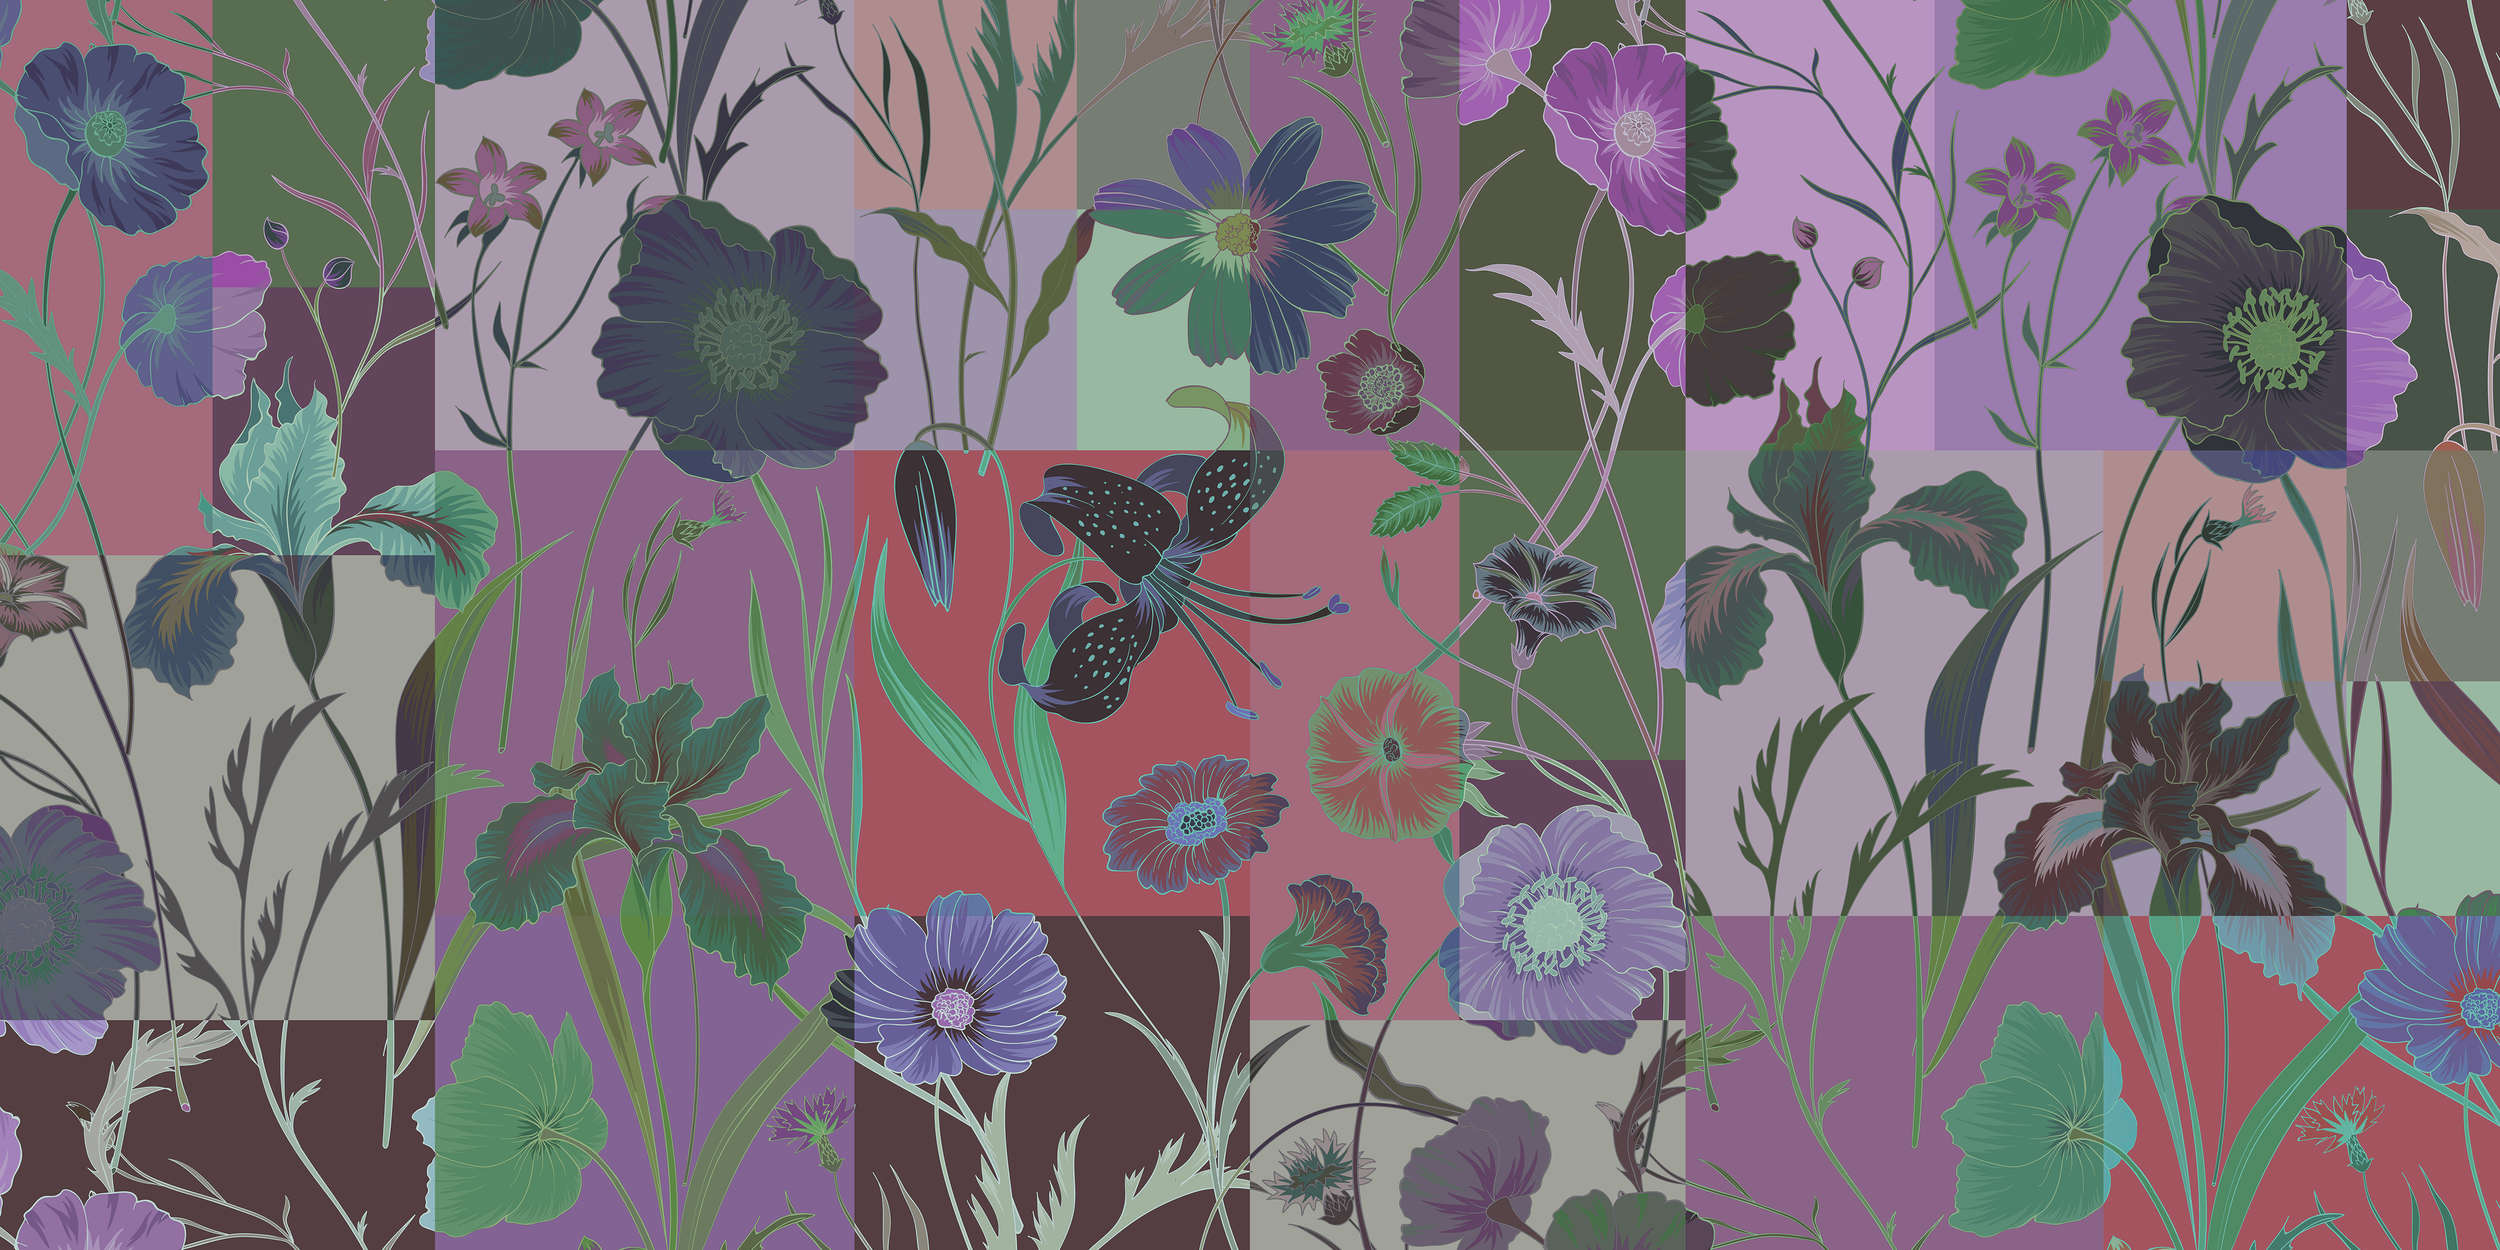             Floral patch 1 - Carta da parati patchwork floreale colorata - Verde, Rosso | Pile liscio opaco
        